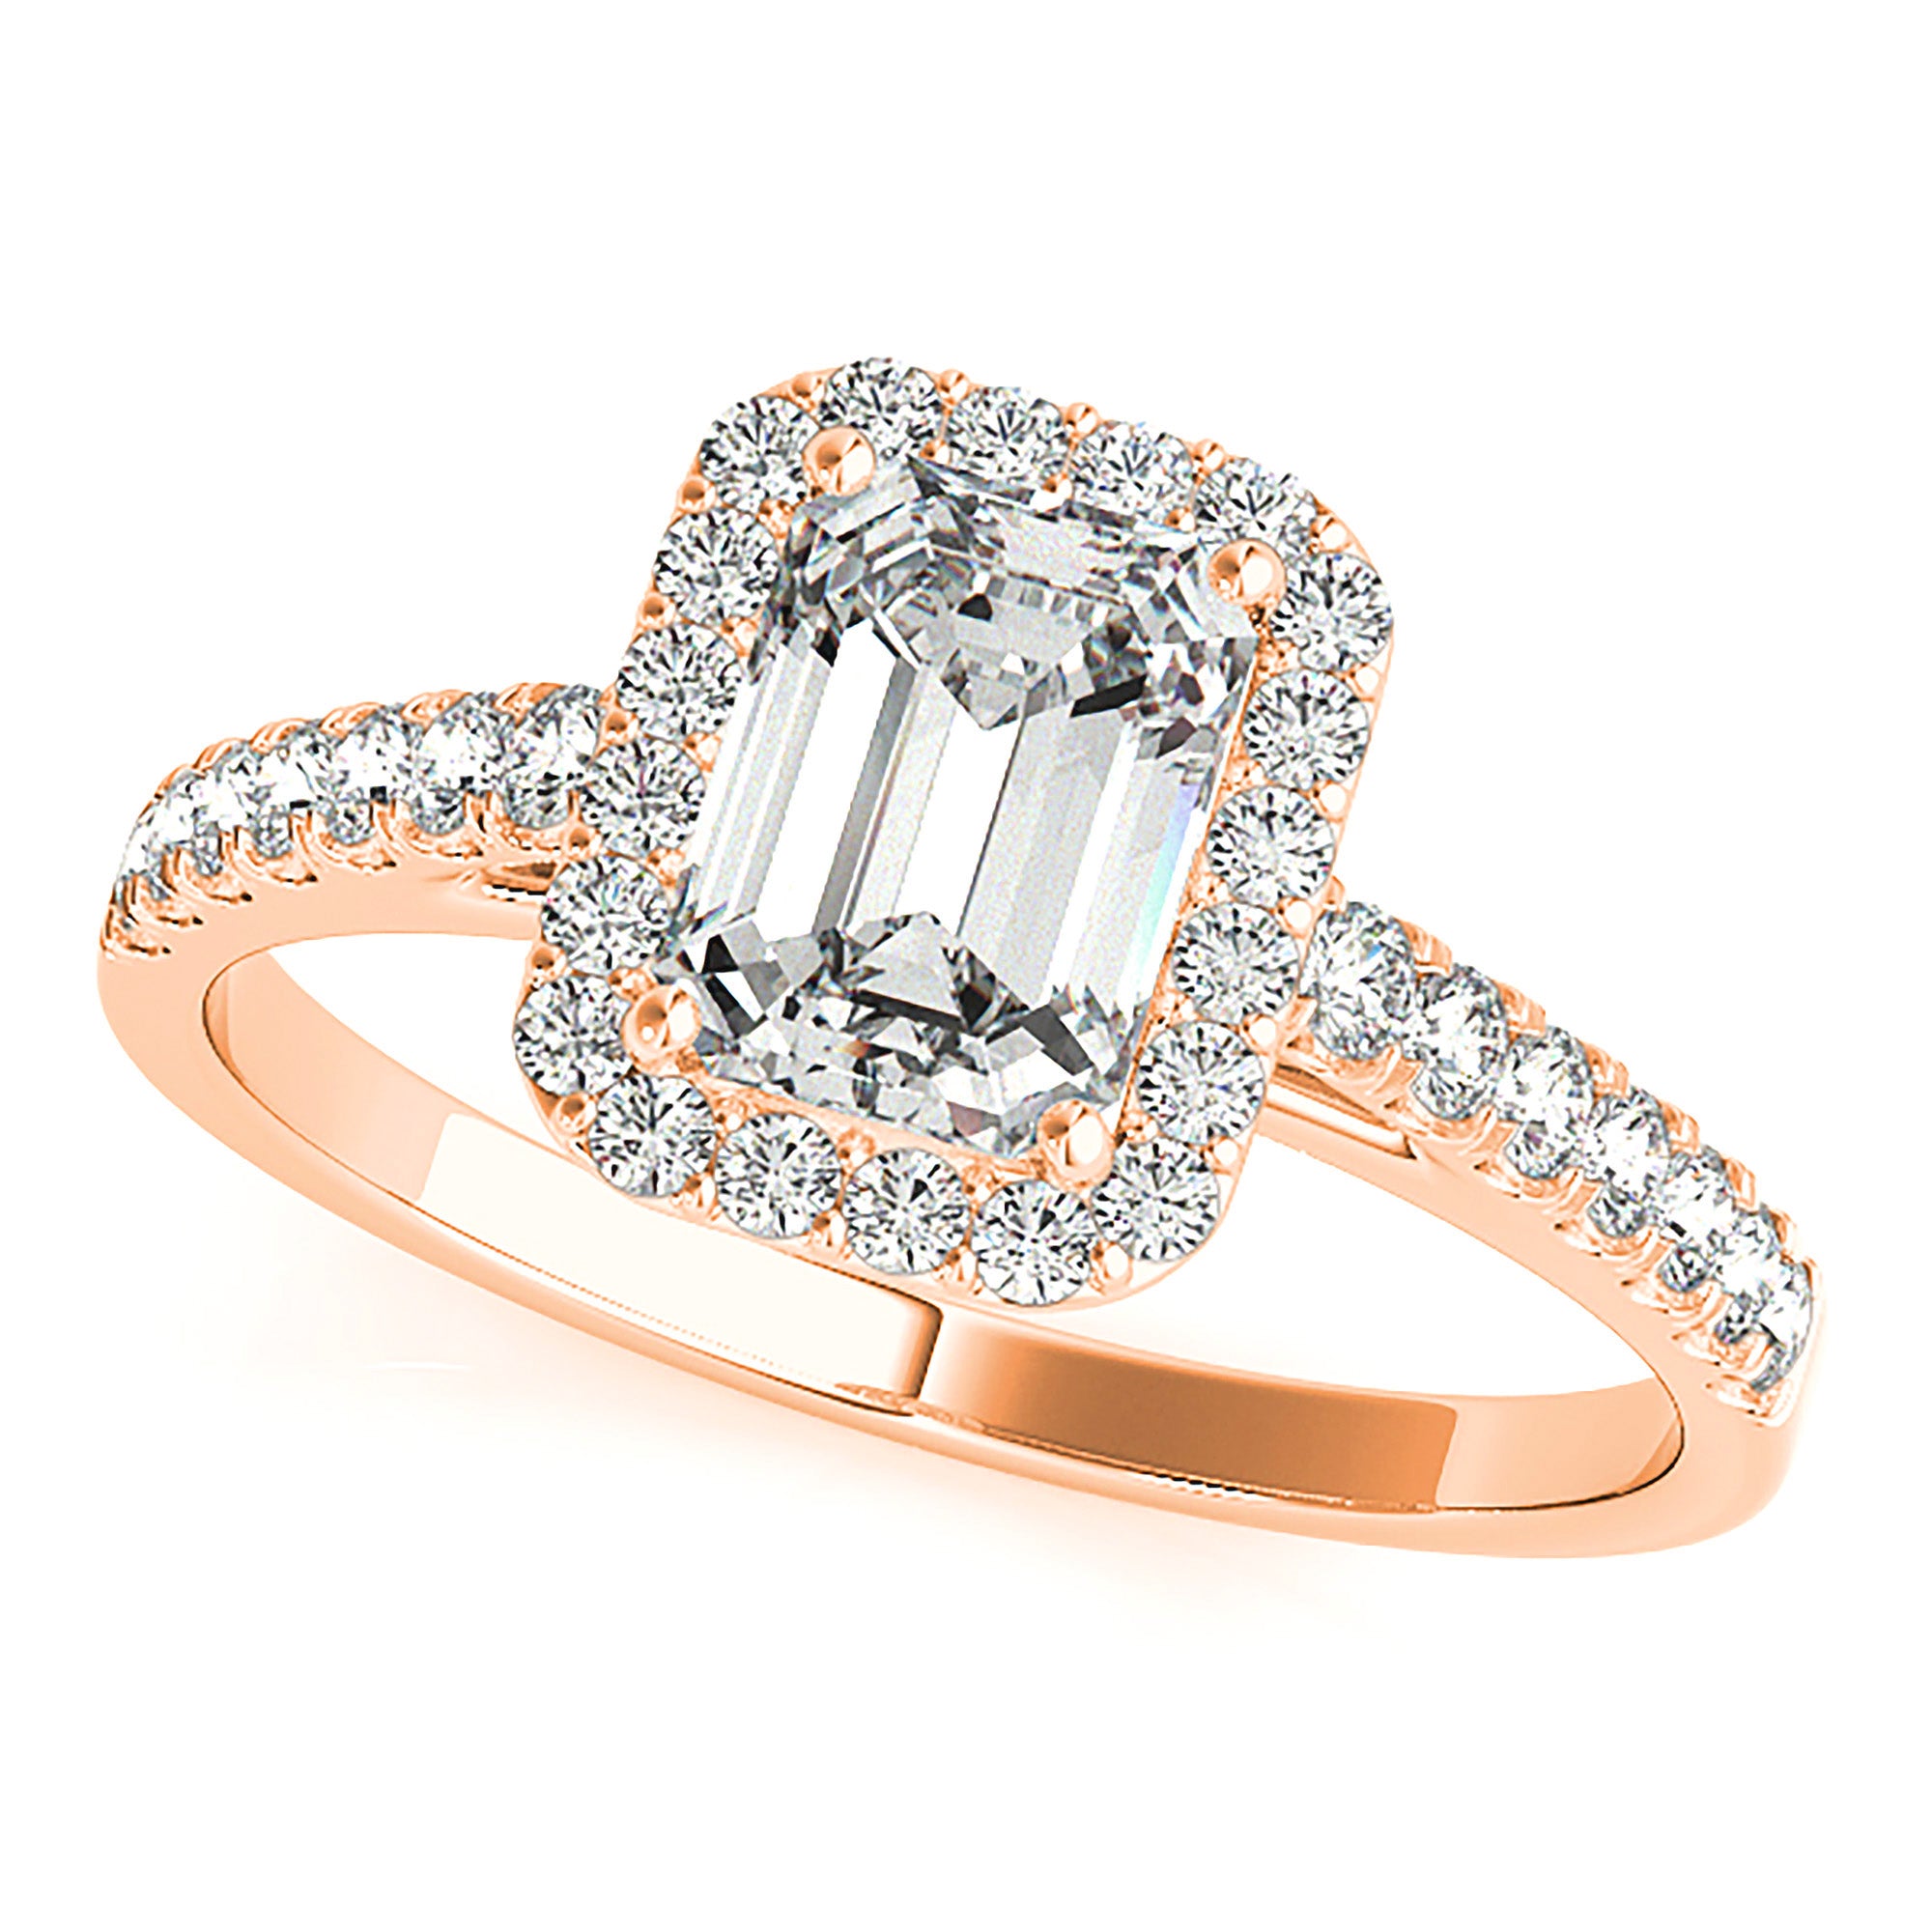 Halo Emerald Cut Diamond Engagement Ring-in 14K/18K White, Yellow, Rose Gold and Platinum - Christmas Jewelry Gift -VIRABYANI